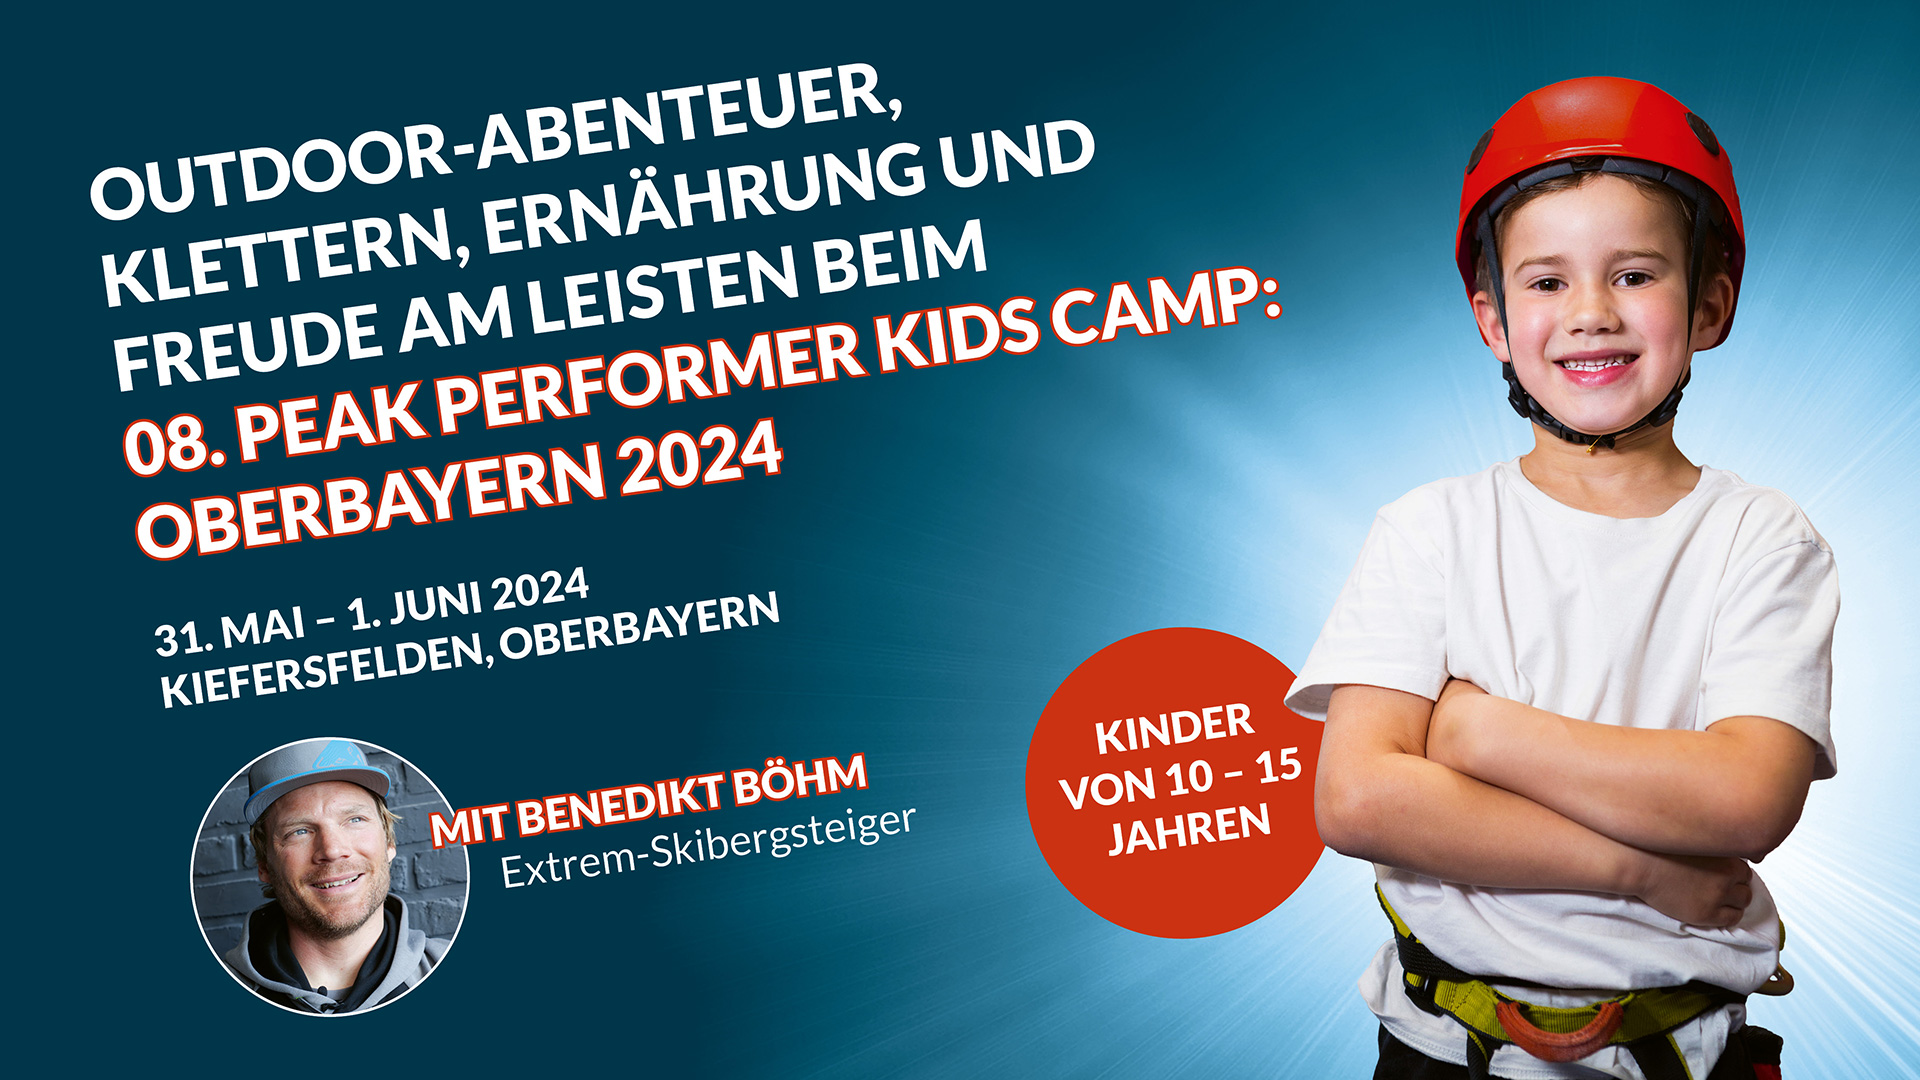 Peak Performer Kids Camp Oberbayern